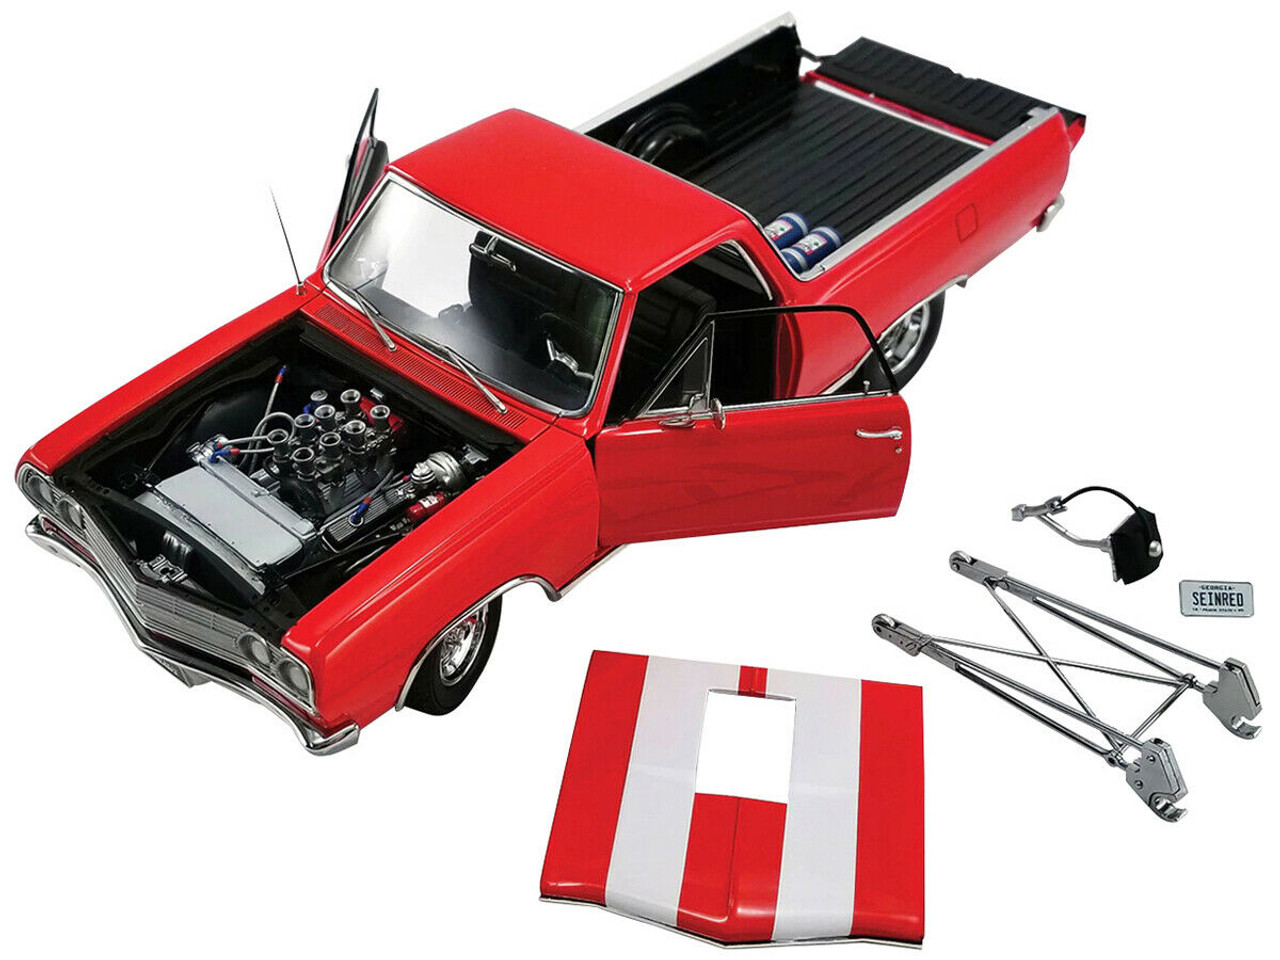 1/18 ACME 1965 Chevrolet Chevy El Camino Drag Outlaws (Red) Diecast Car Model